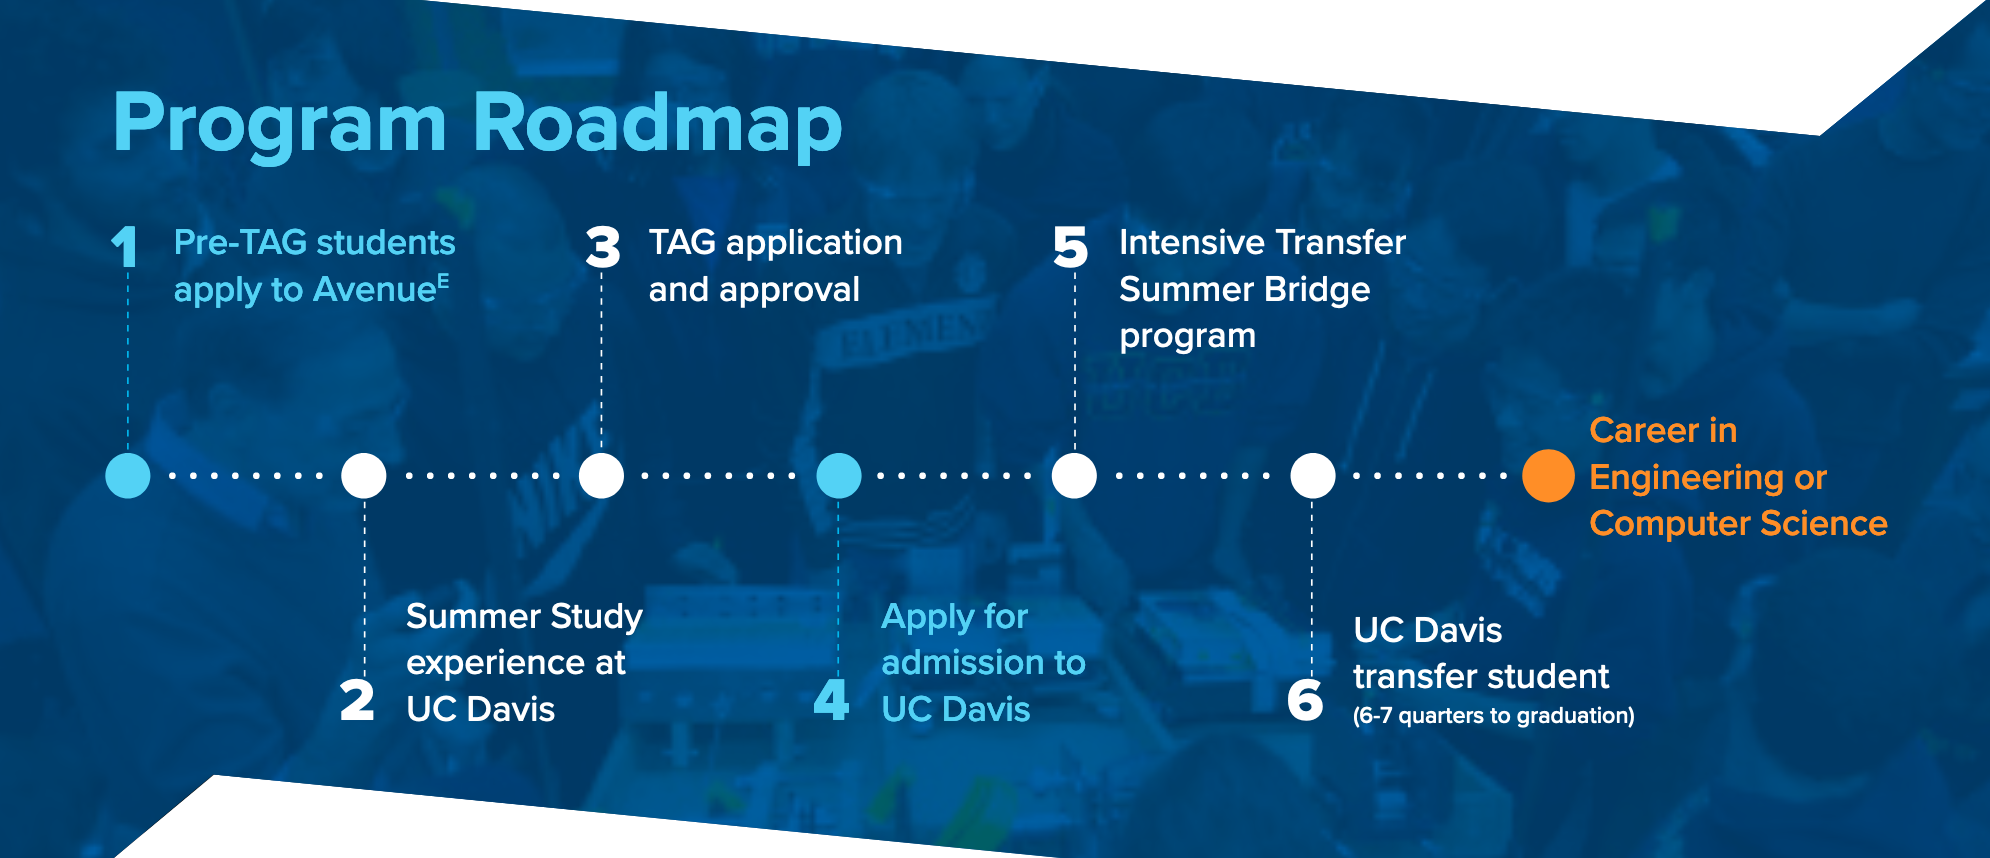 Student Roadmap